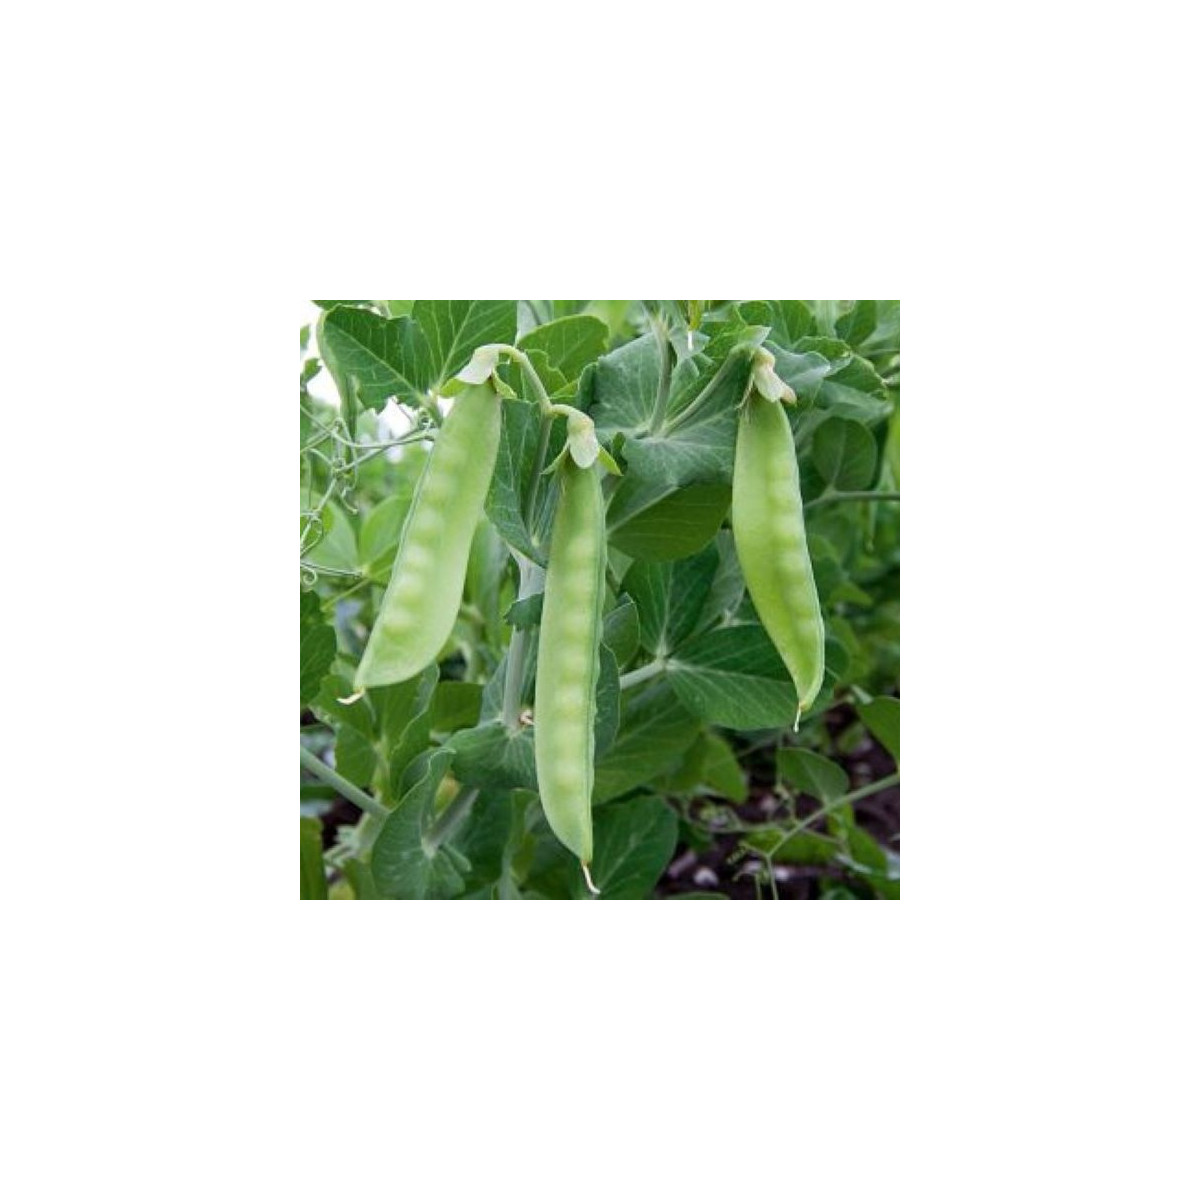 BIO Hrách cukrový Ambrosia - Pisum sativum - bio osivo hrachu - 45 ks